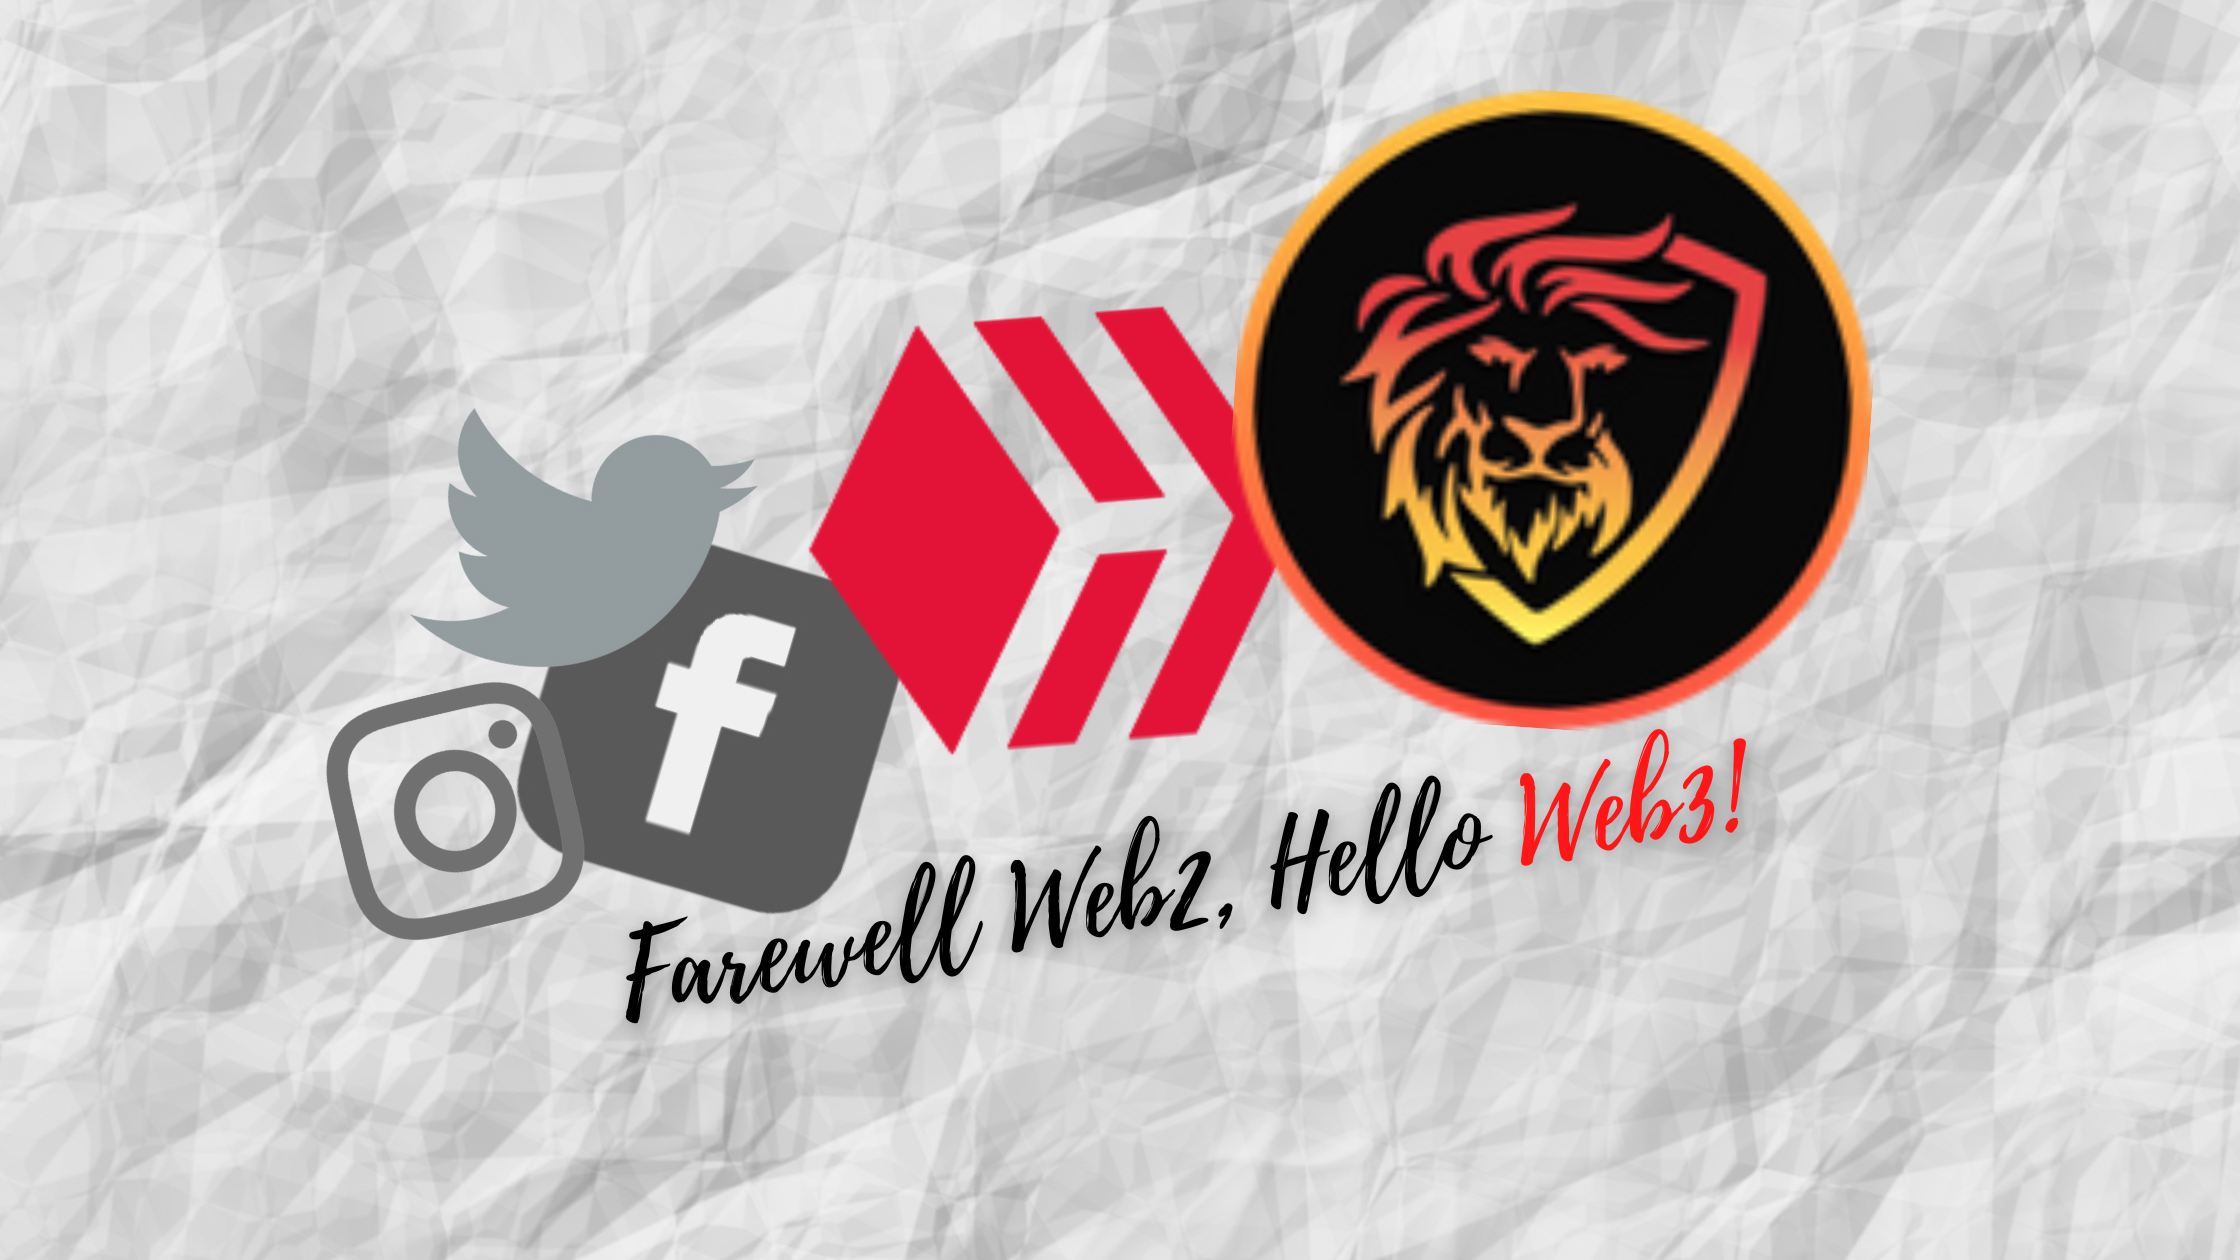 Farewell Web2, Hello Web3!.png